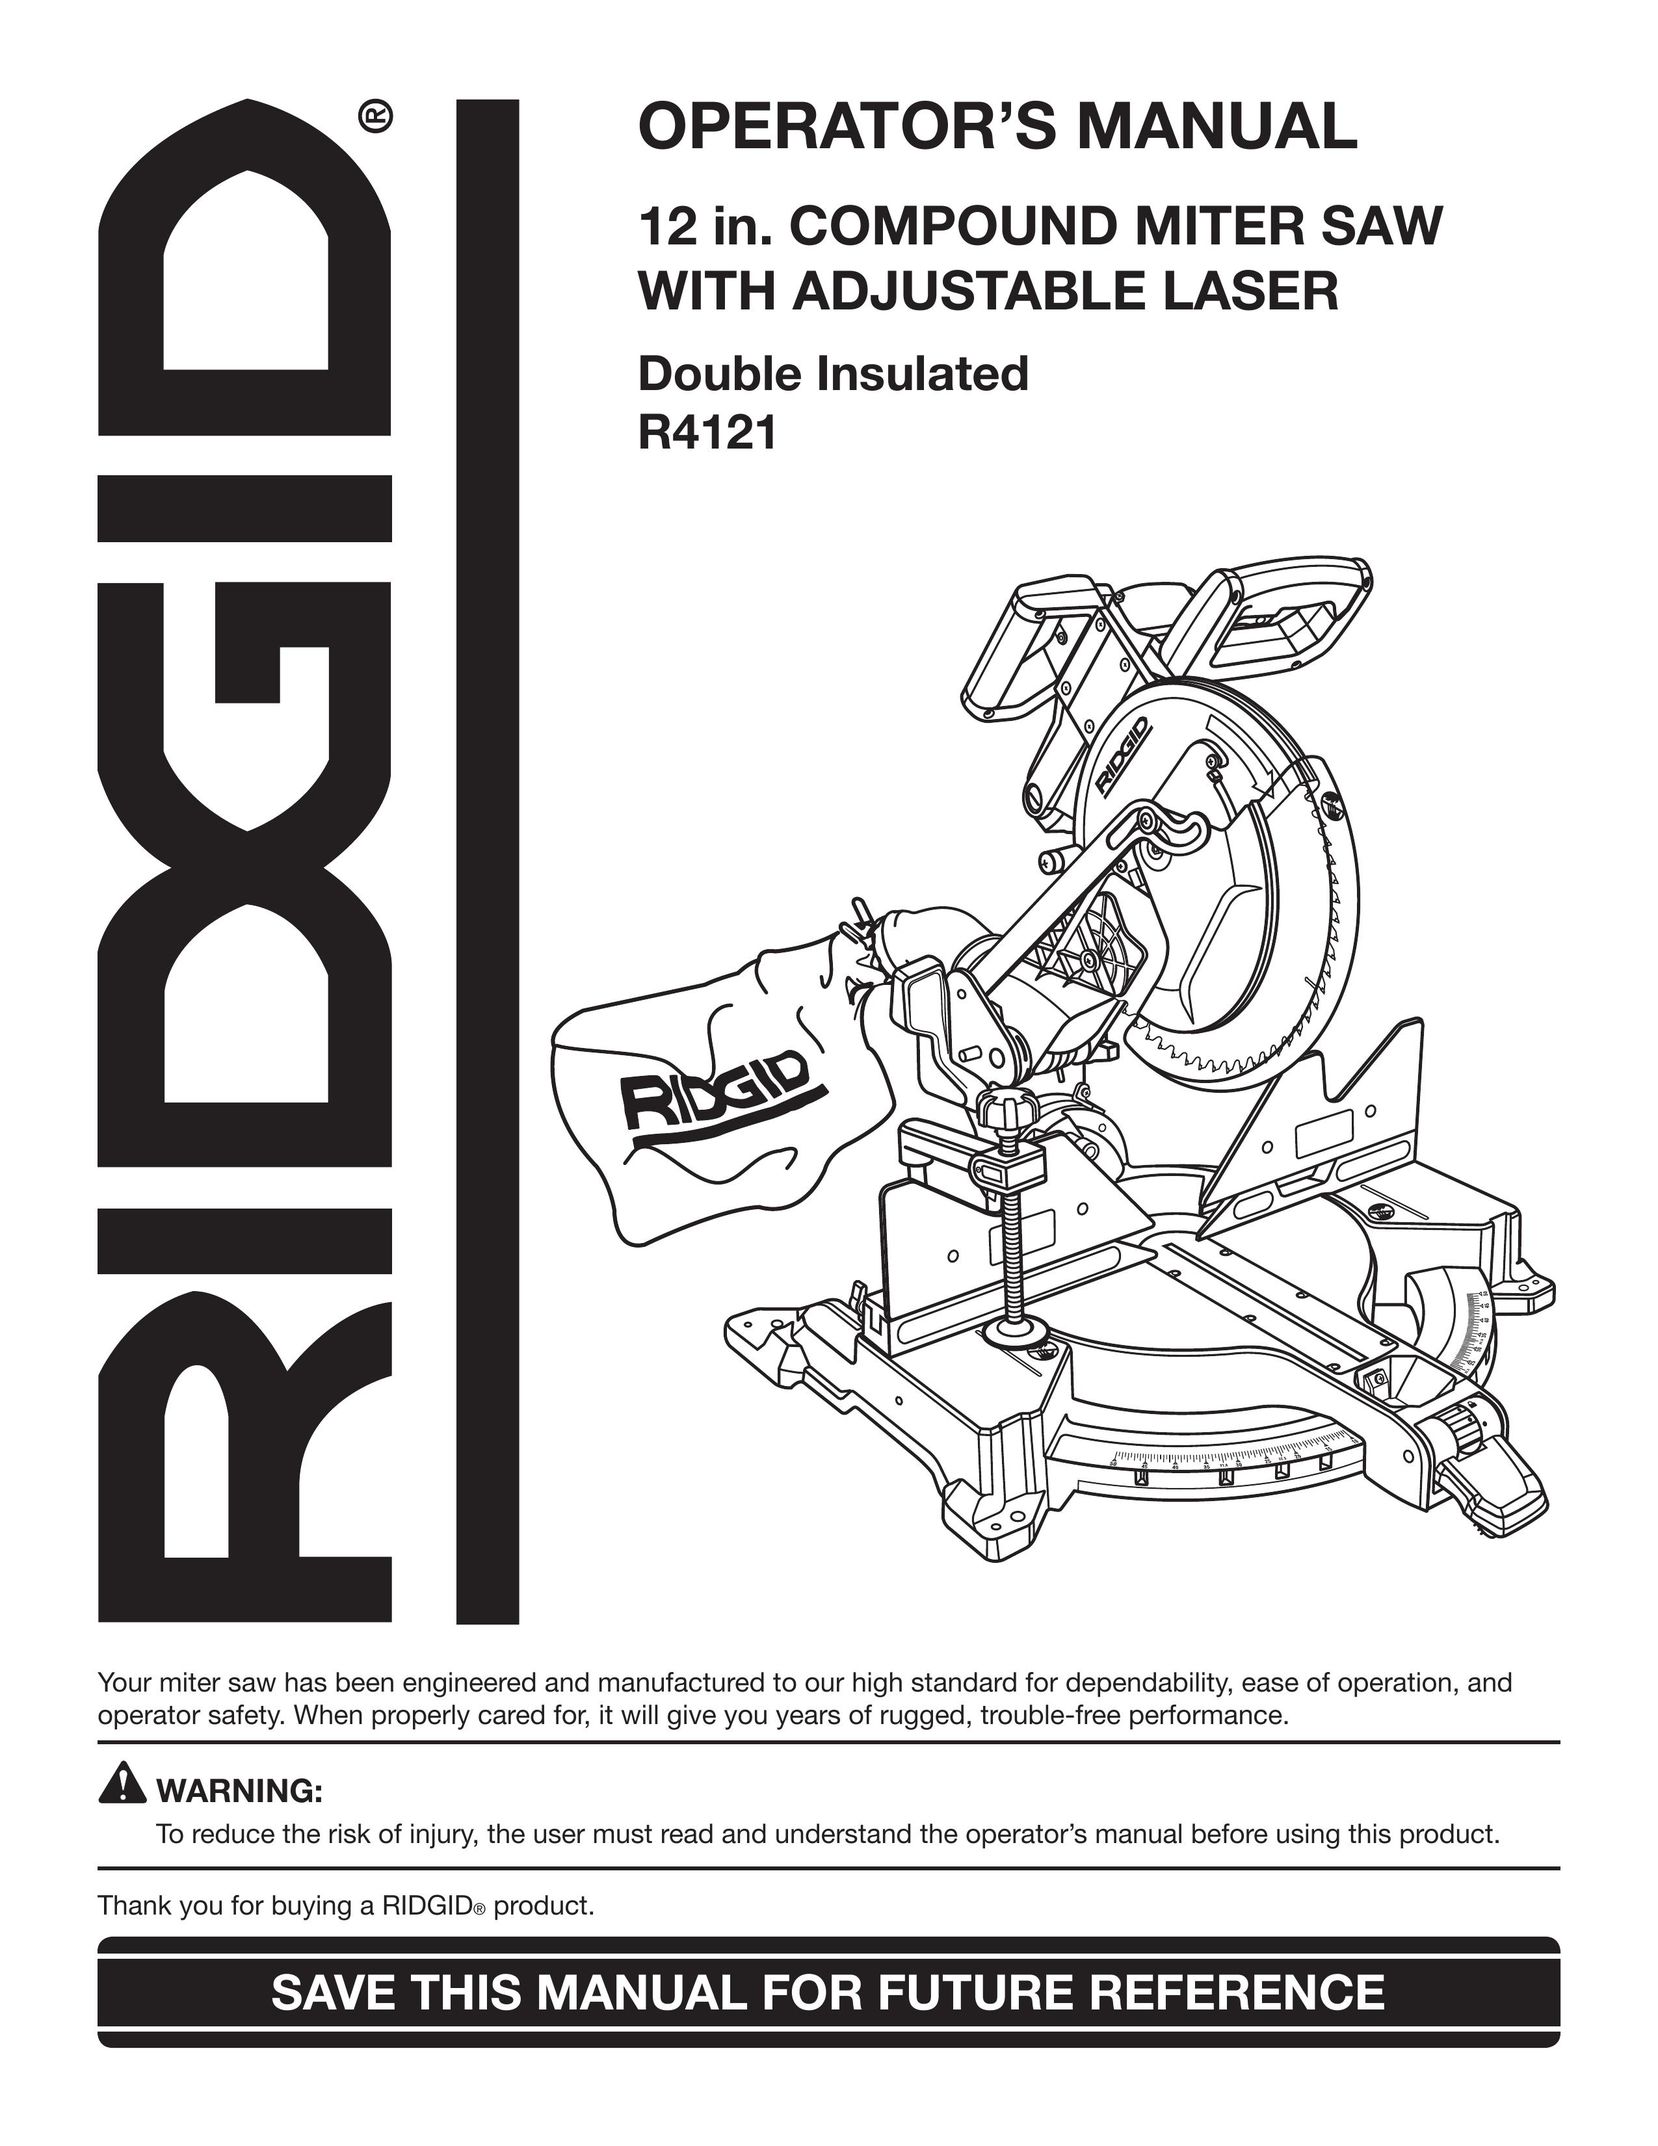 RIDGID R4121 Saw User Manual